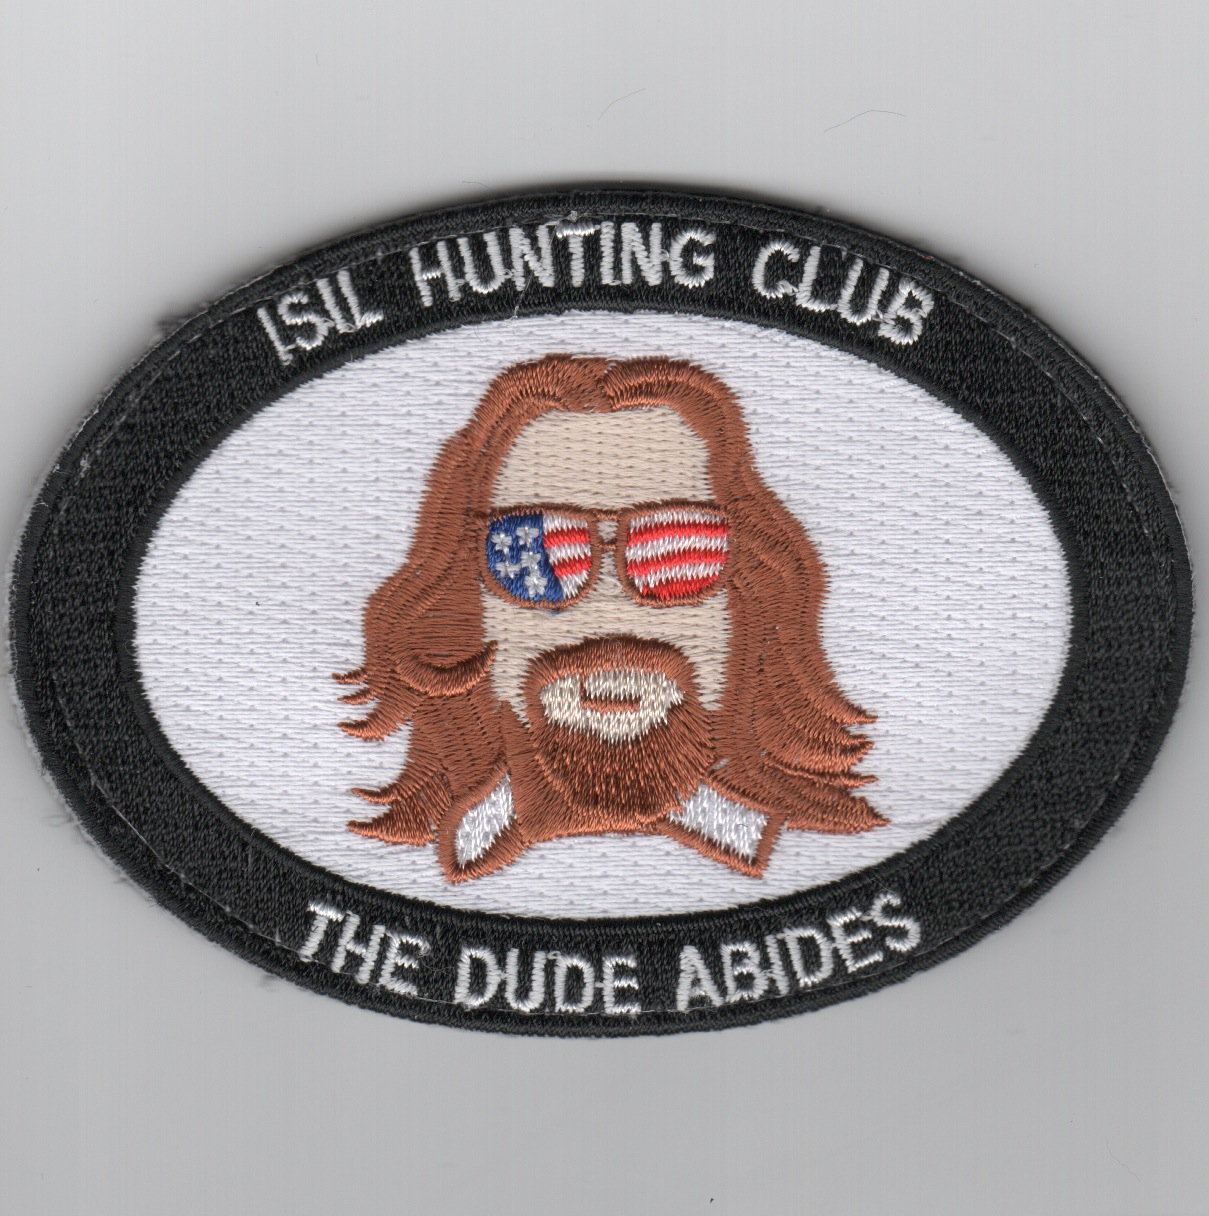 ISIL Hunting Club (Dude Abides)